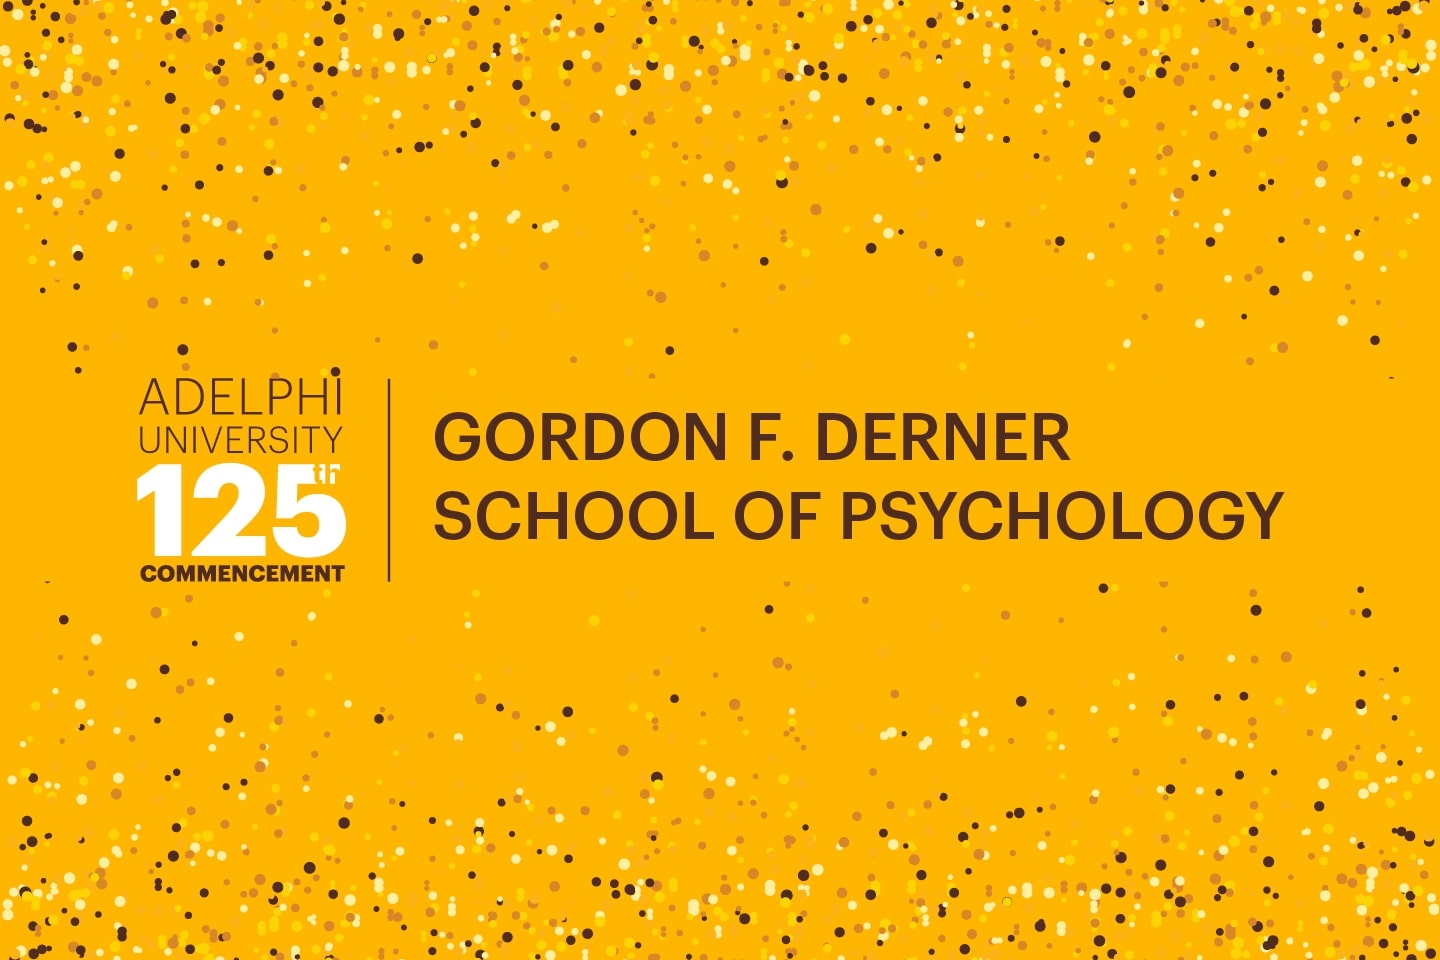 Adelphi University 125th Commencement: Gordon F. Derner School of Psychology